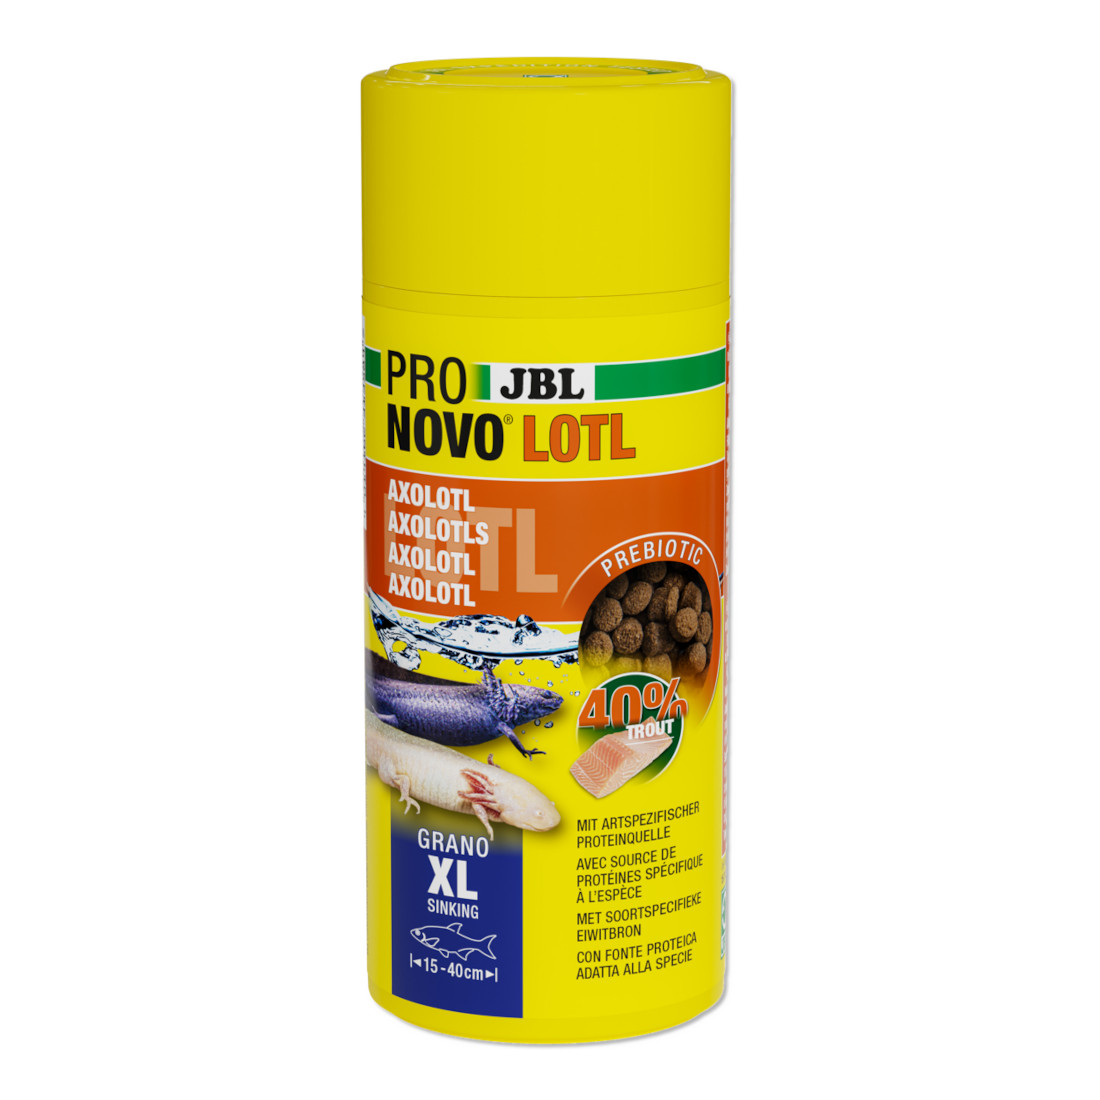 JBL PRONOVO Lotl Grano XL 250 ml -Alleinfutter für große Axolotl-